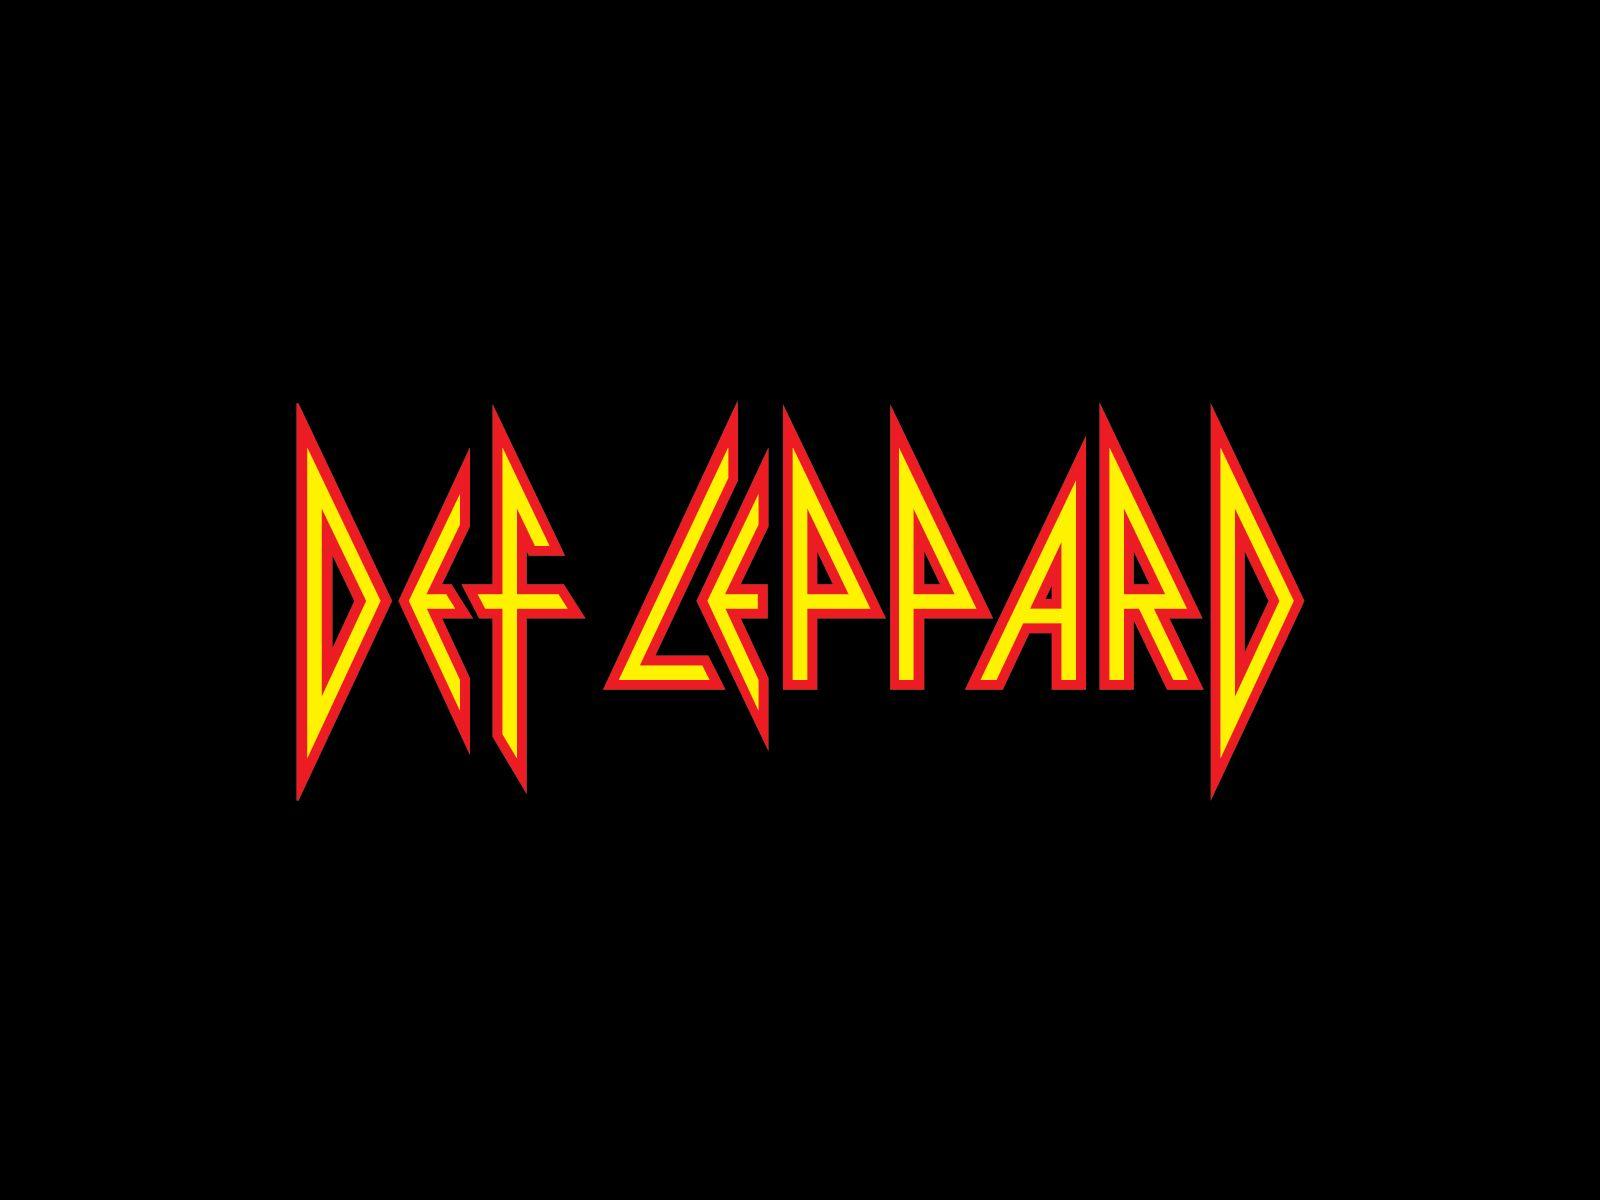 Def Leppard Band Logo - Def Leppard logo and wallpaper | CONCERTS | Pinterest | Def Leppard ...